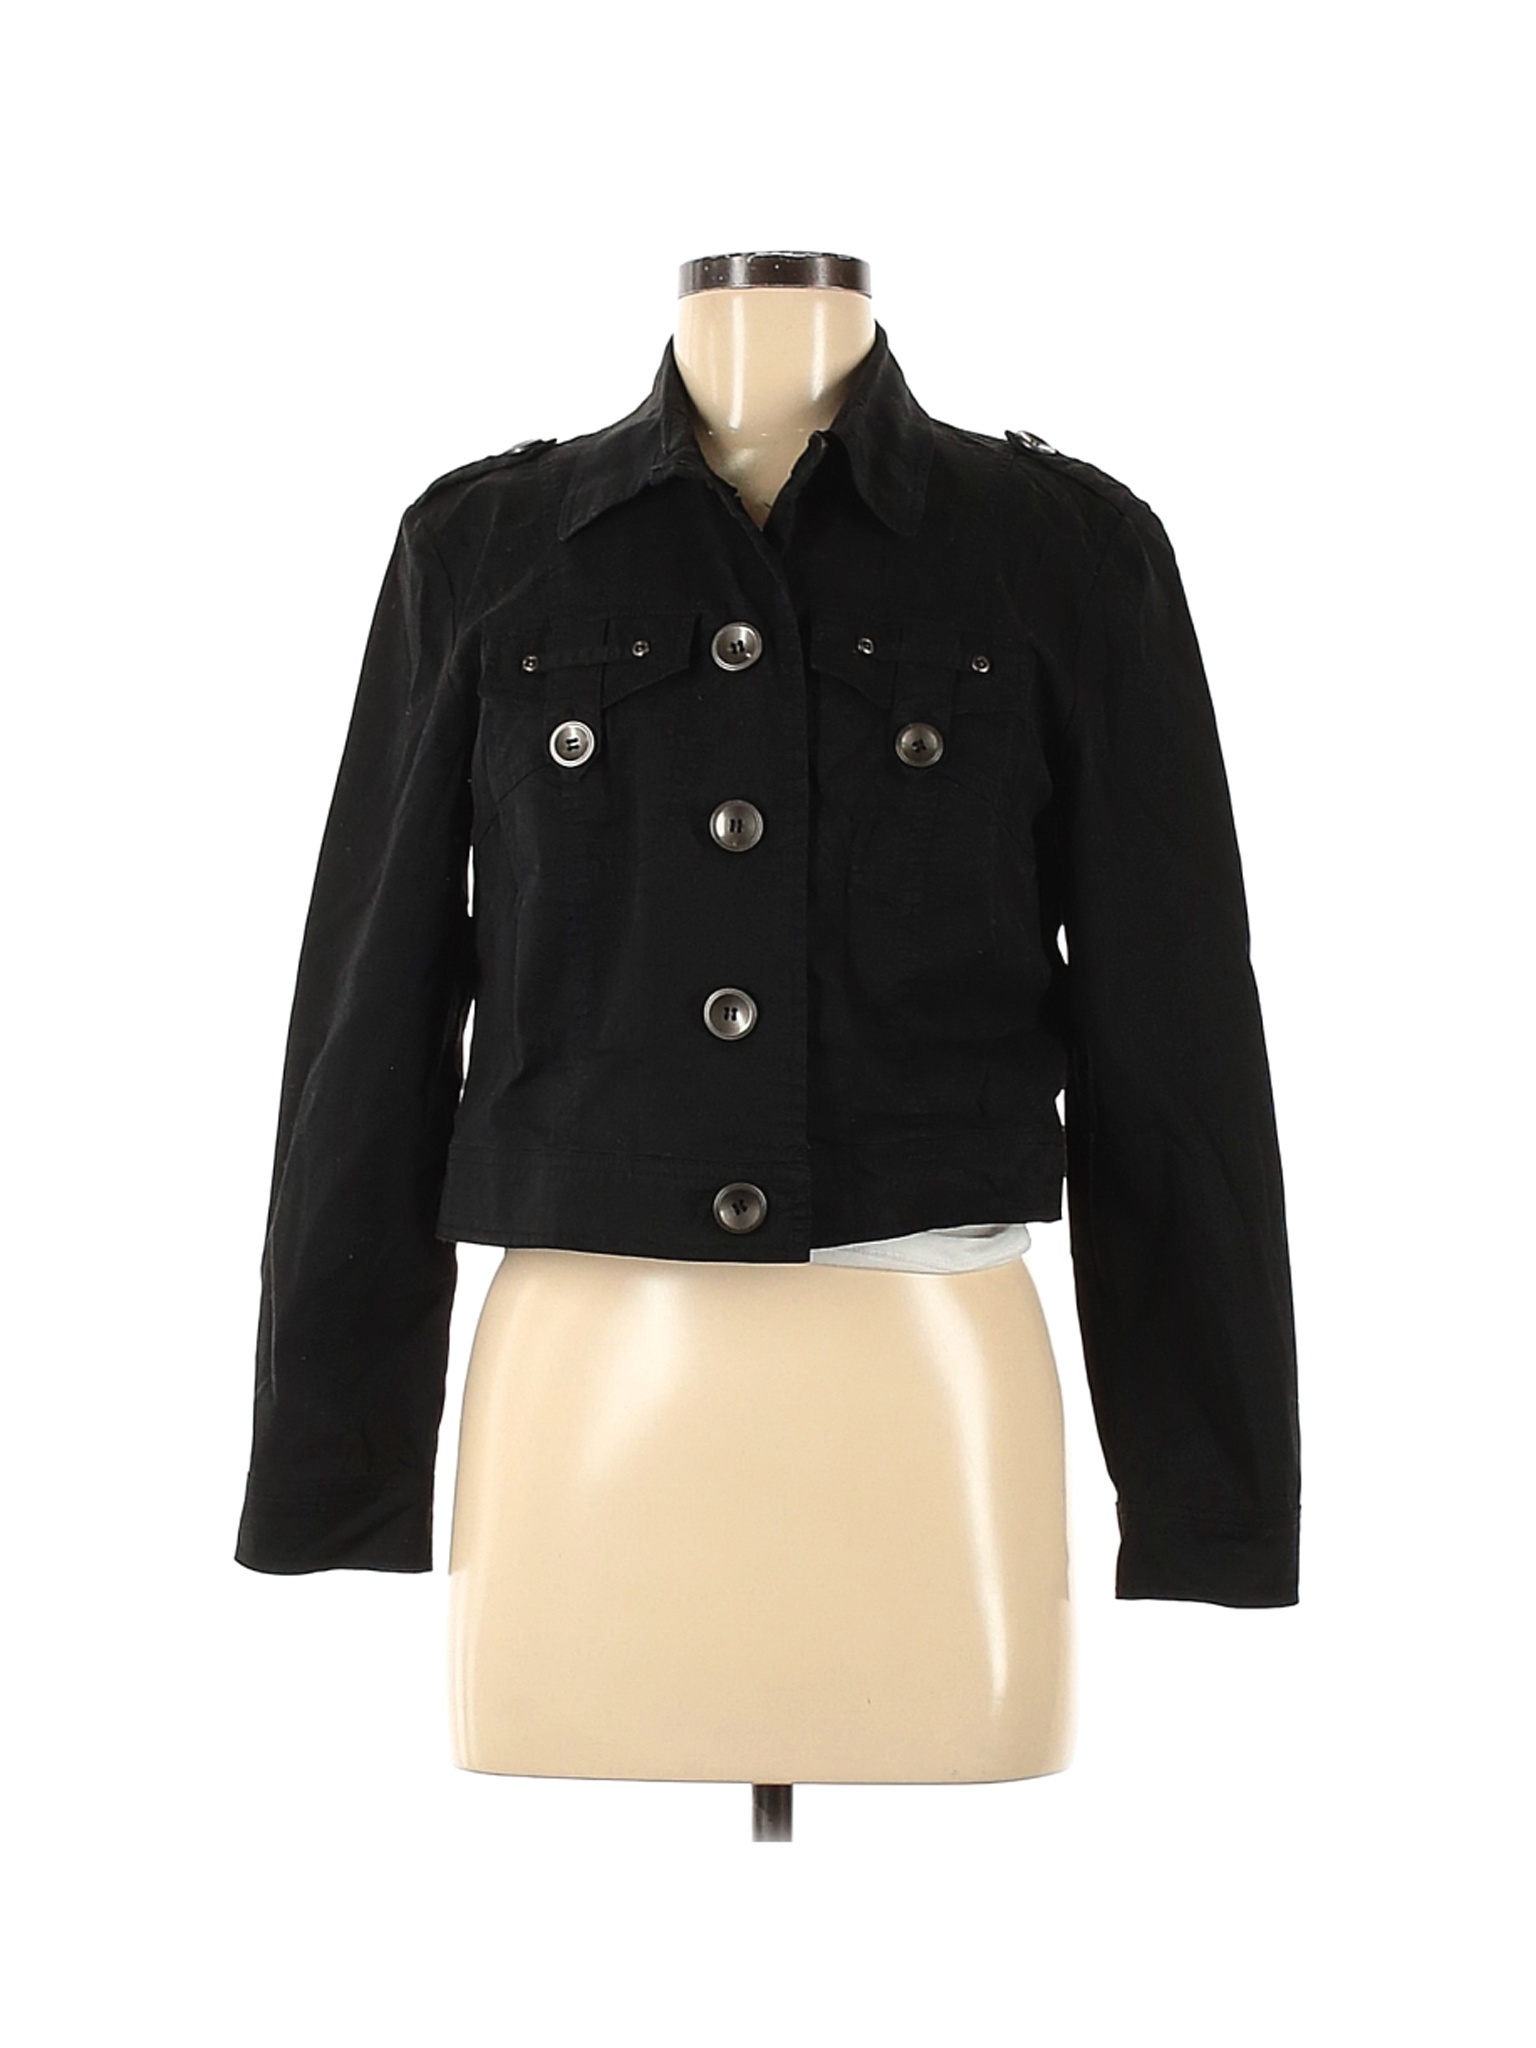 For The Republic Women Black Jacket 8 | eBay